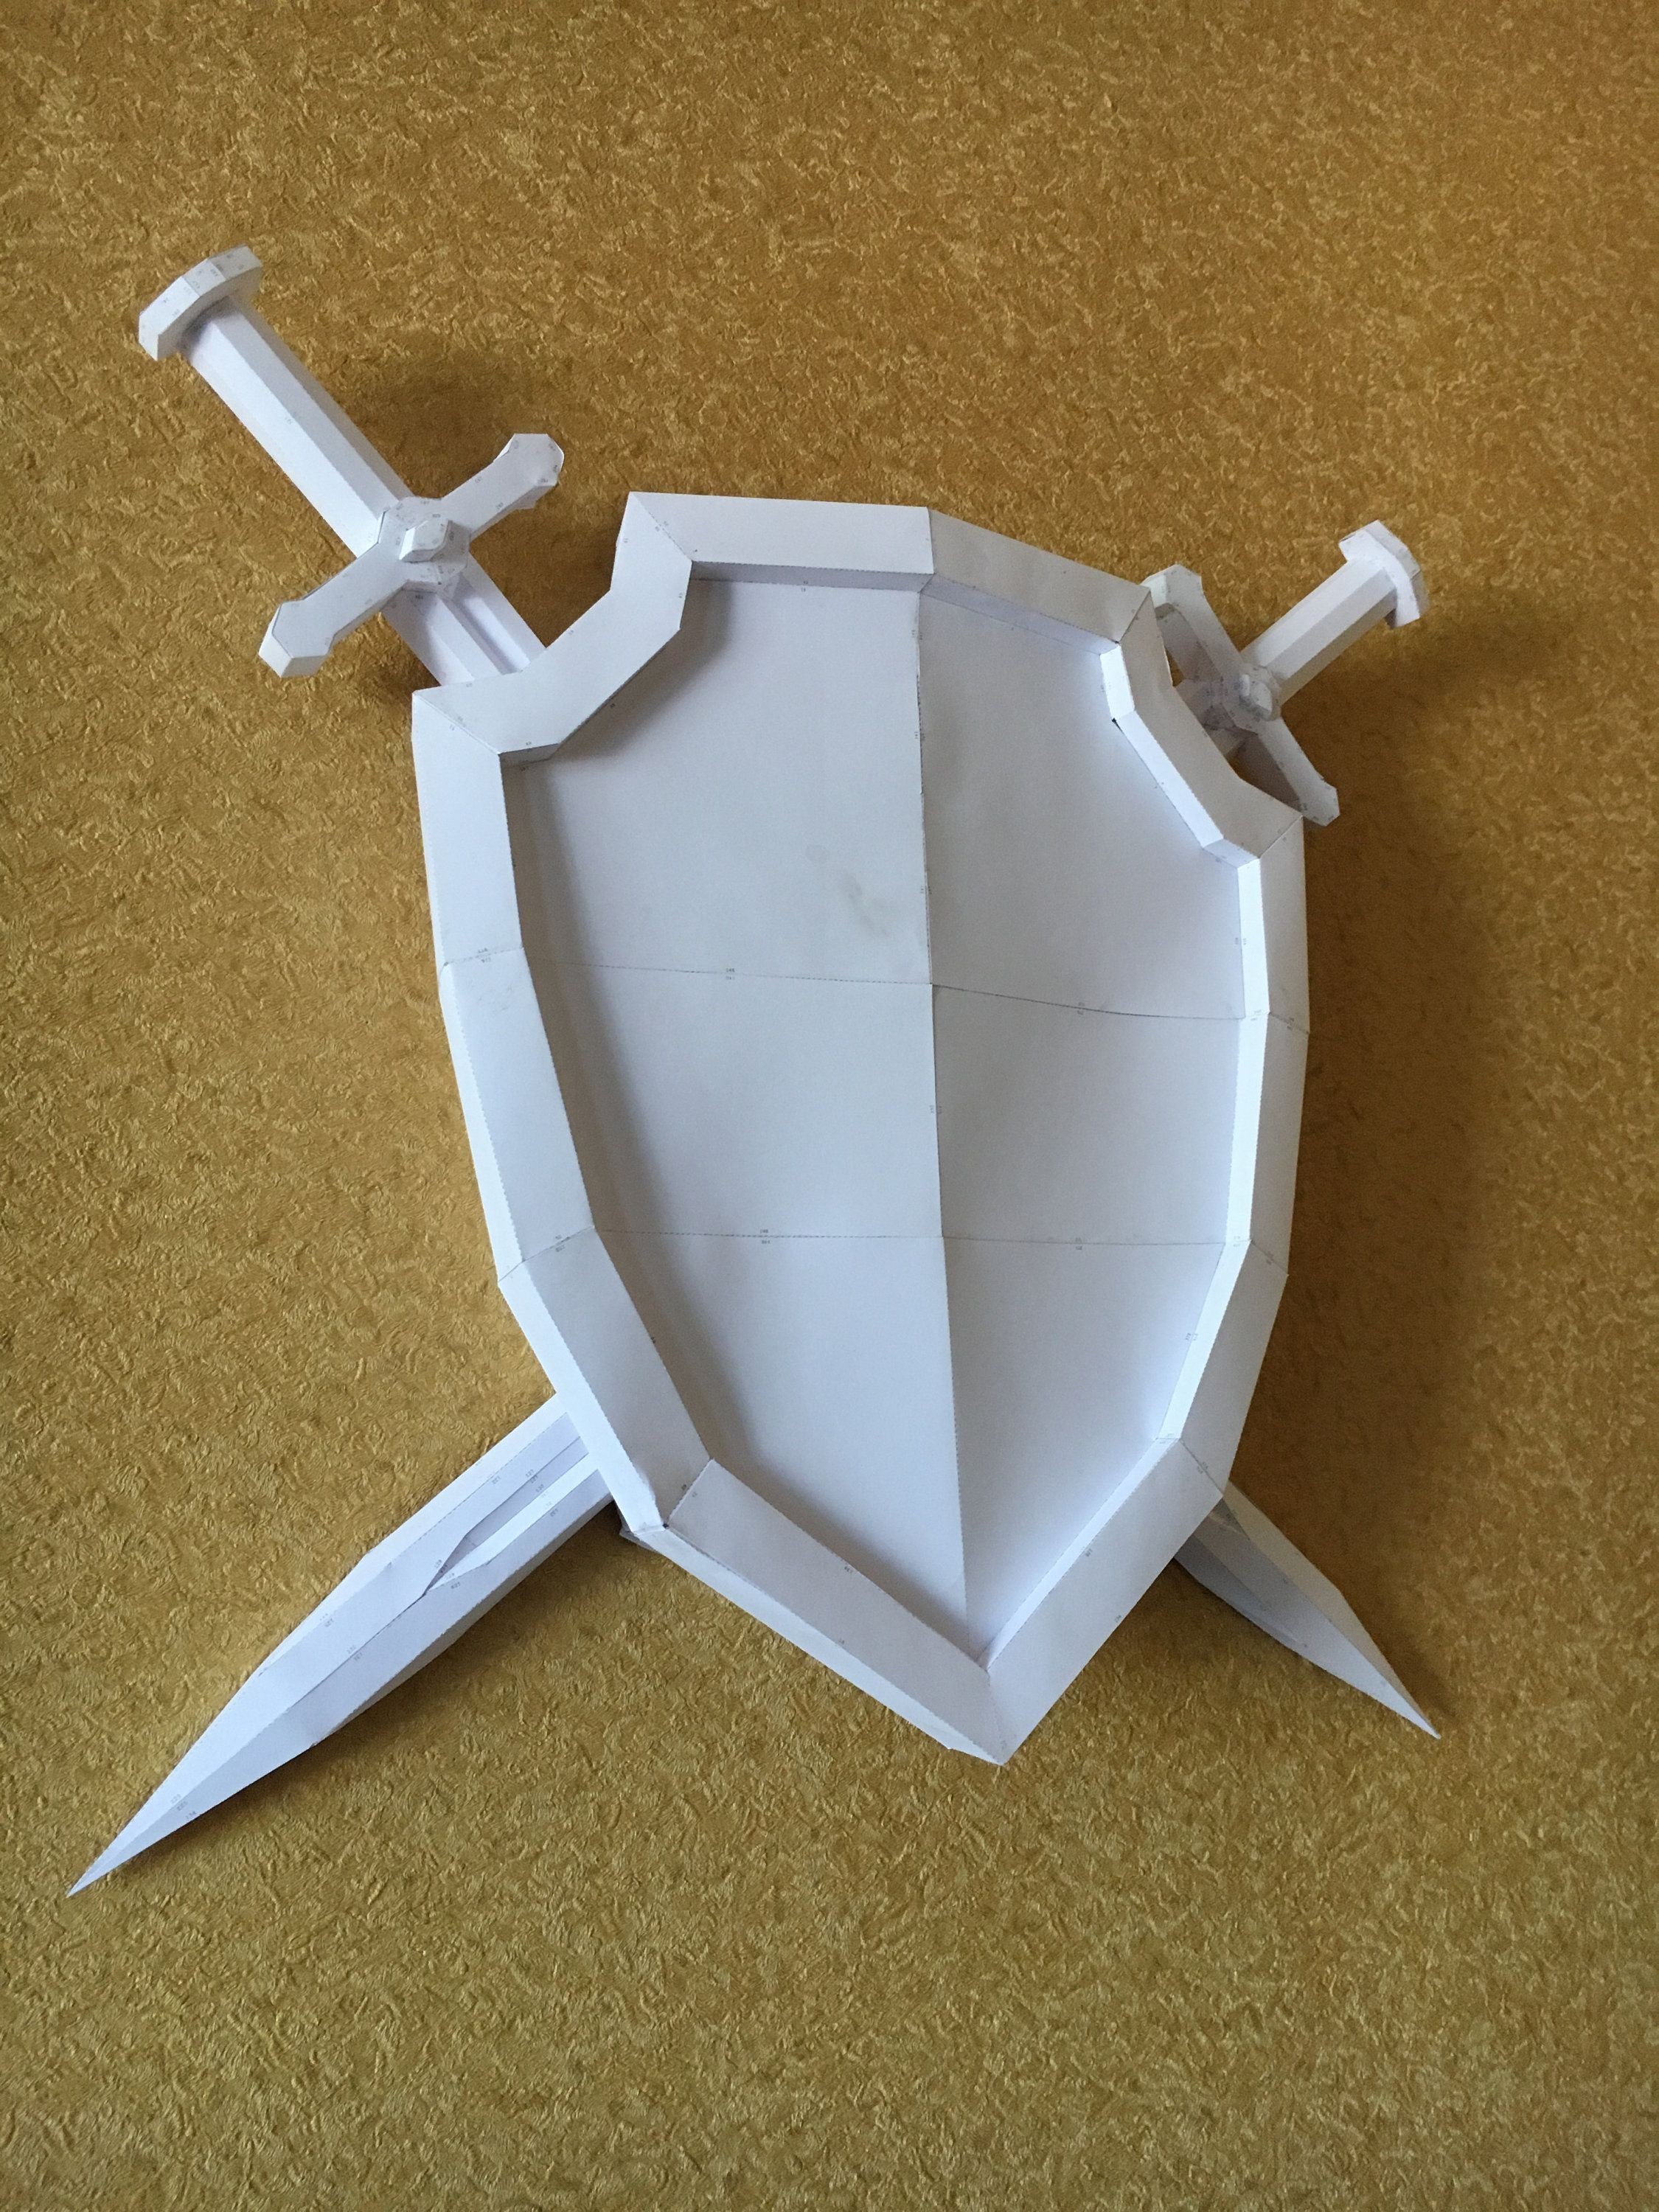 Fox Papercraft Sword Shield Diy Papercraft Model ÐÑÐ¼Ð°Ð¶Ð½ÑÐµ Ð¸Ð·Ð´ÐµÐ Ð¸Ñ